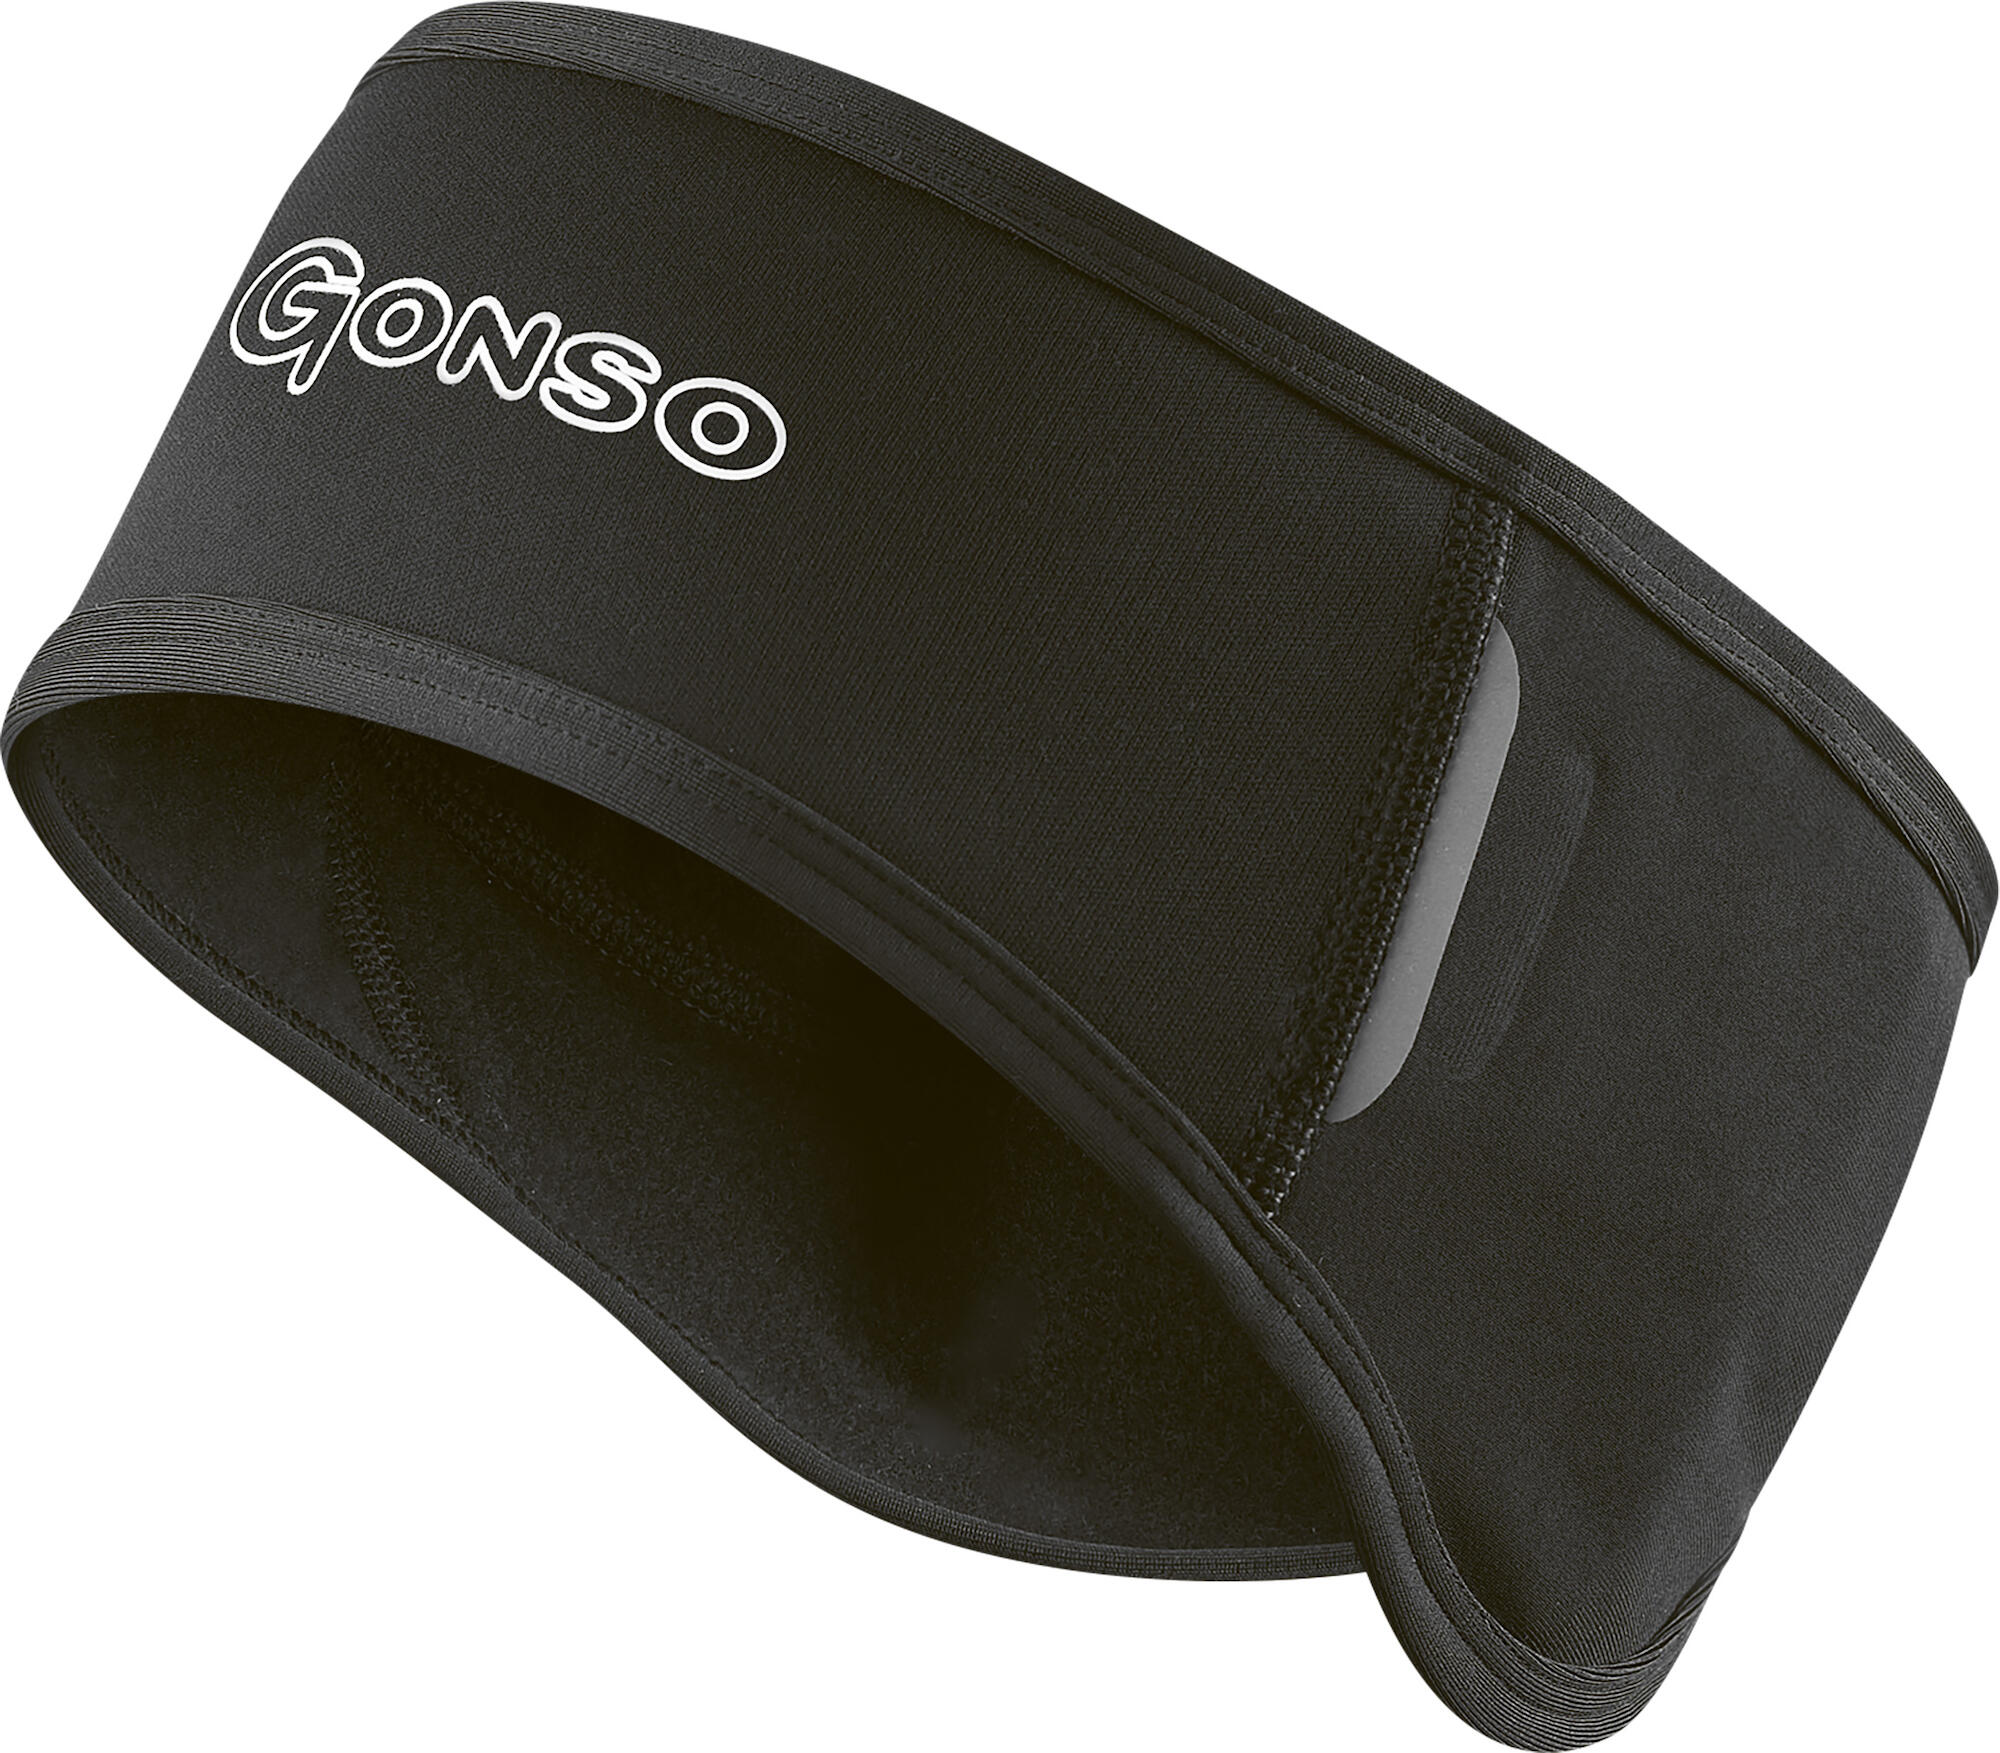 Gonso Stirnband black (900) M